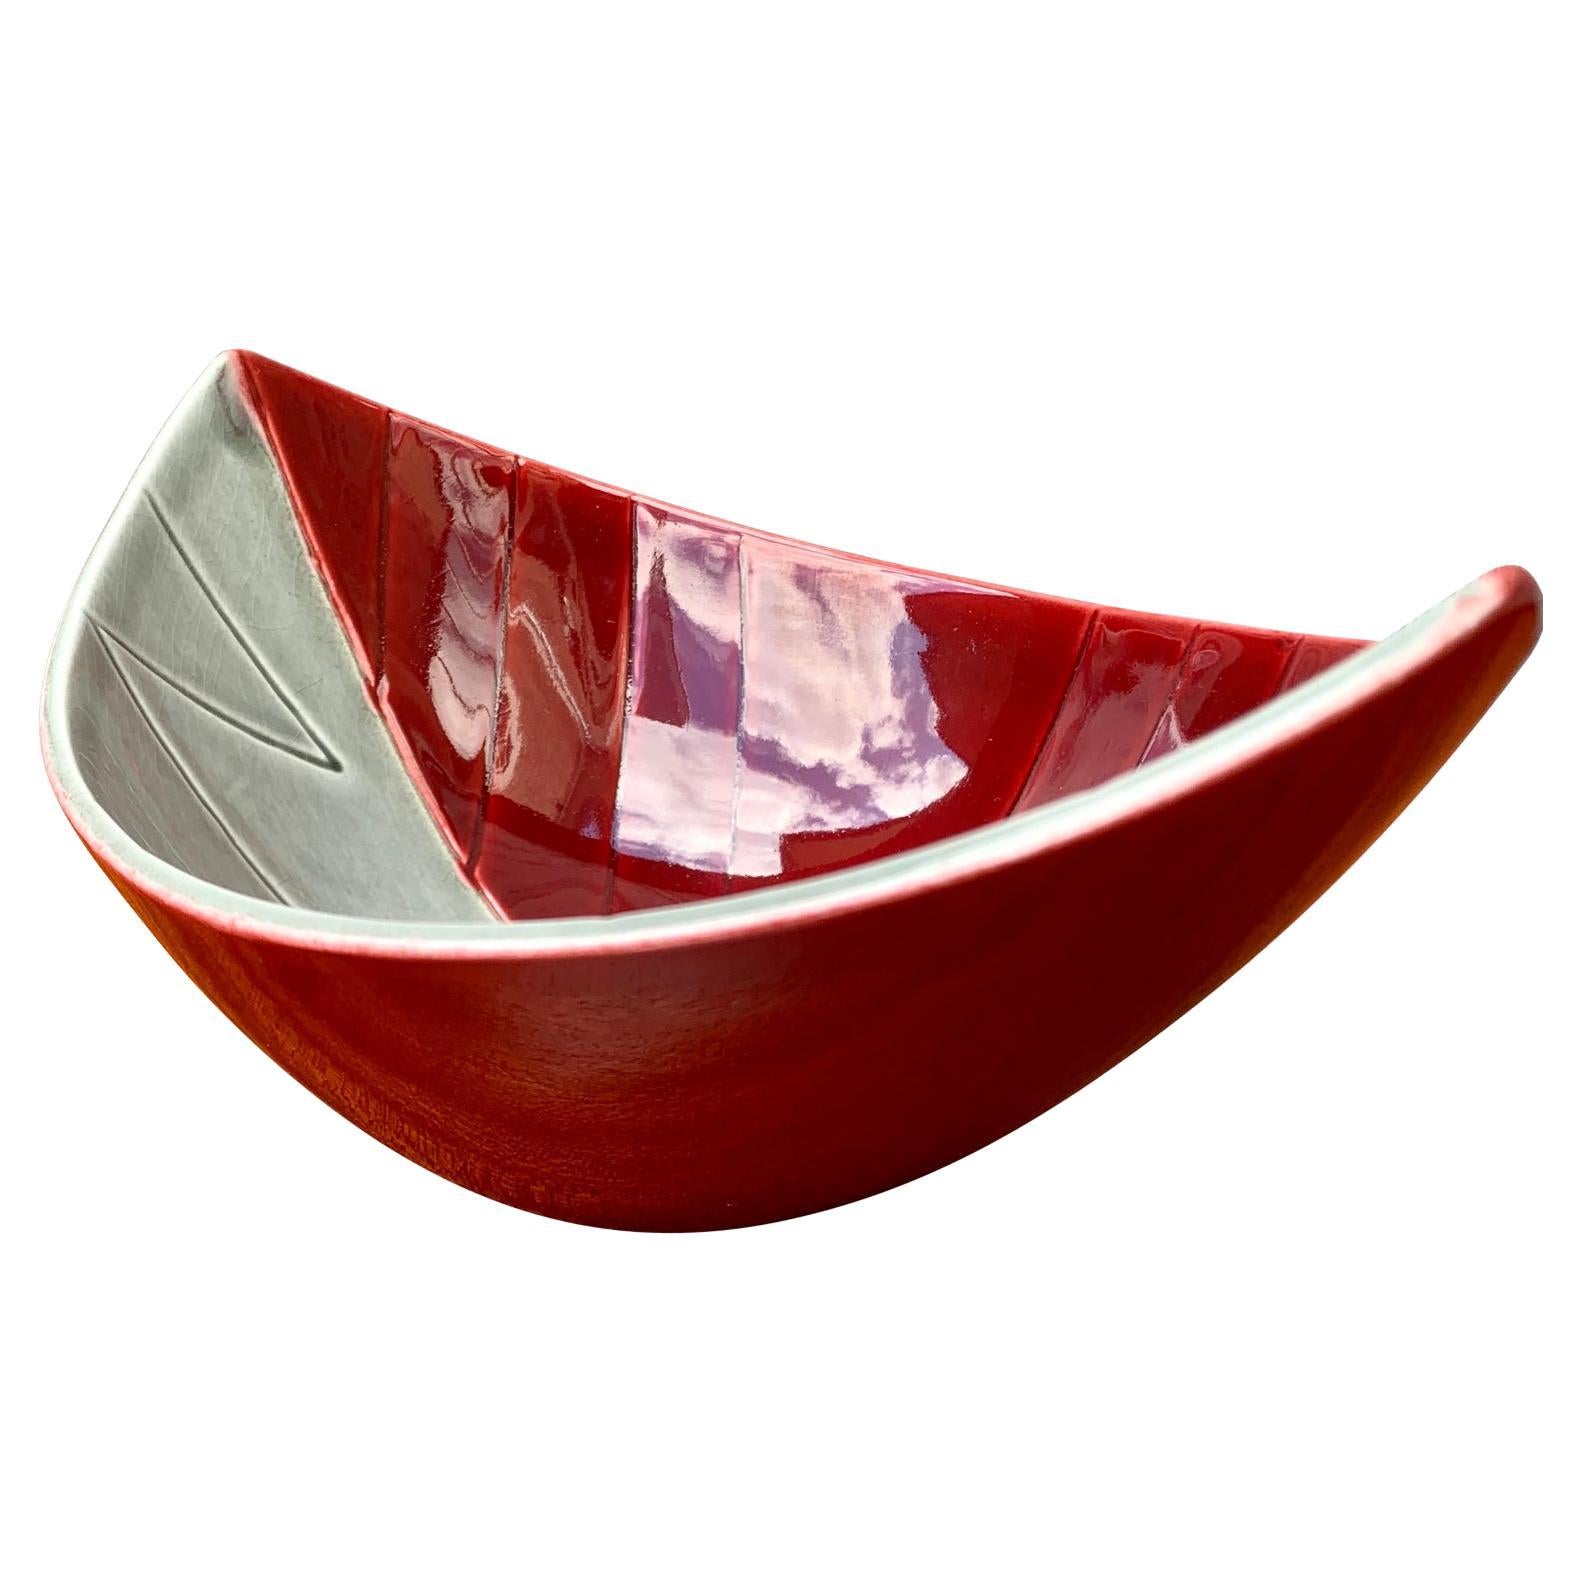 A Swedish Scandinavian Modern wine-red and grey stoneware bowl by Swedish Modernist designer Carl-Harry Stålhane for Rörstrand. This model is named 